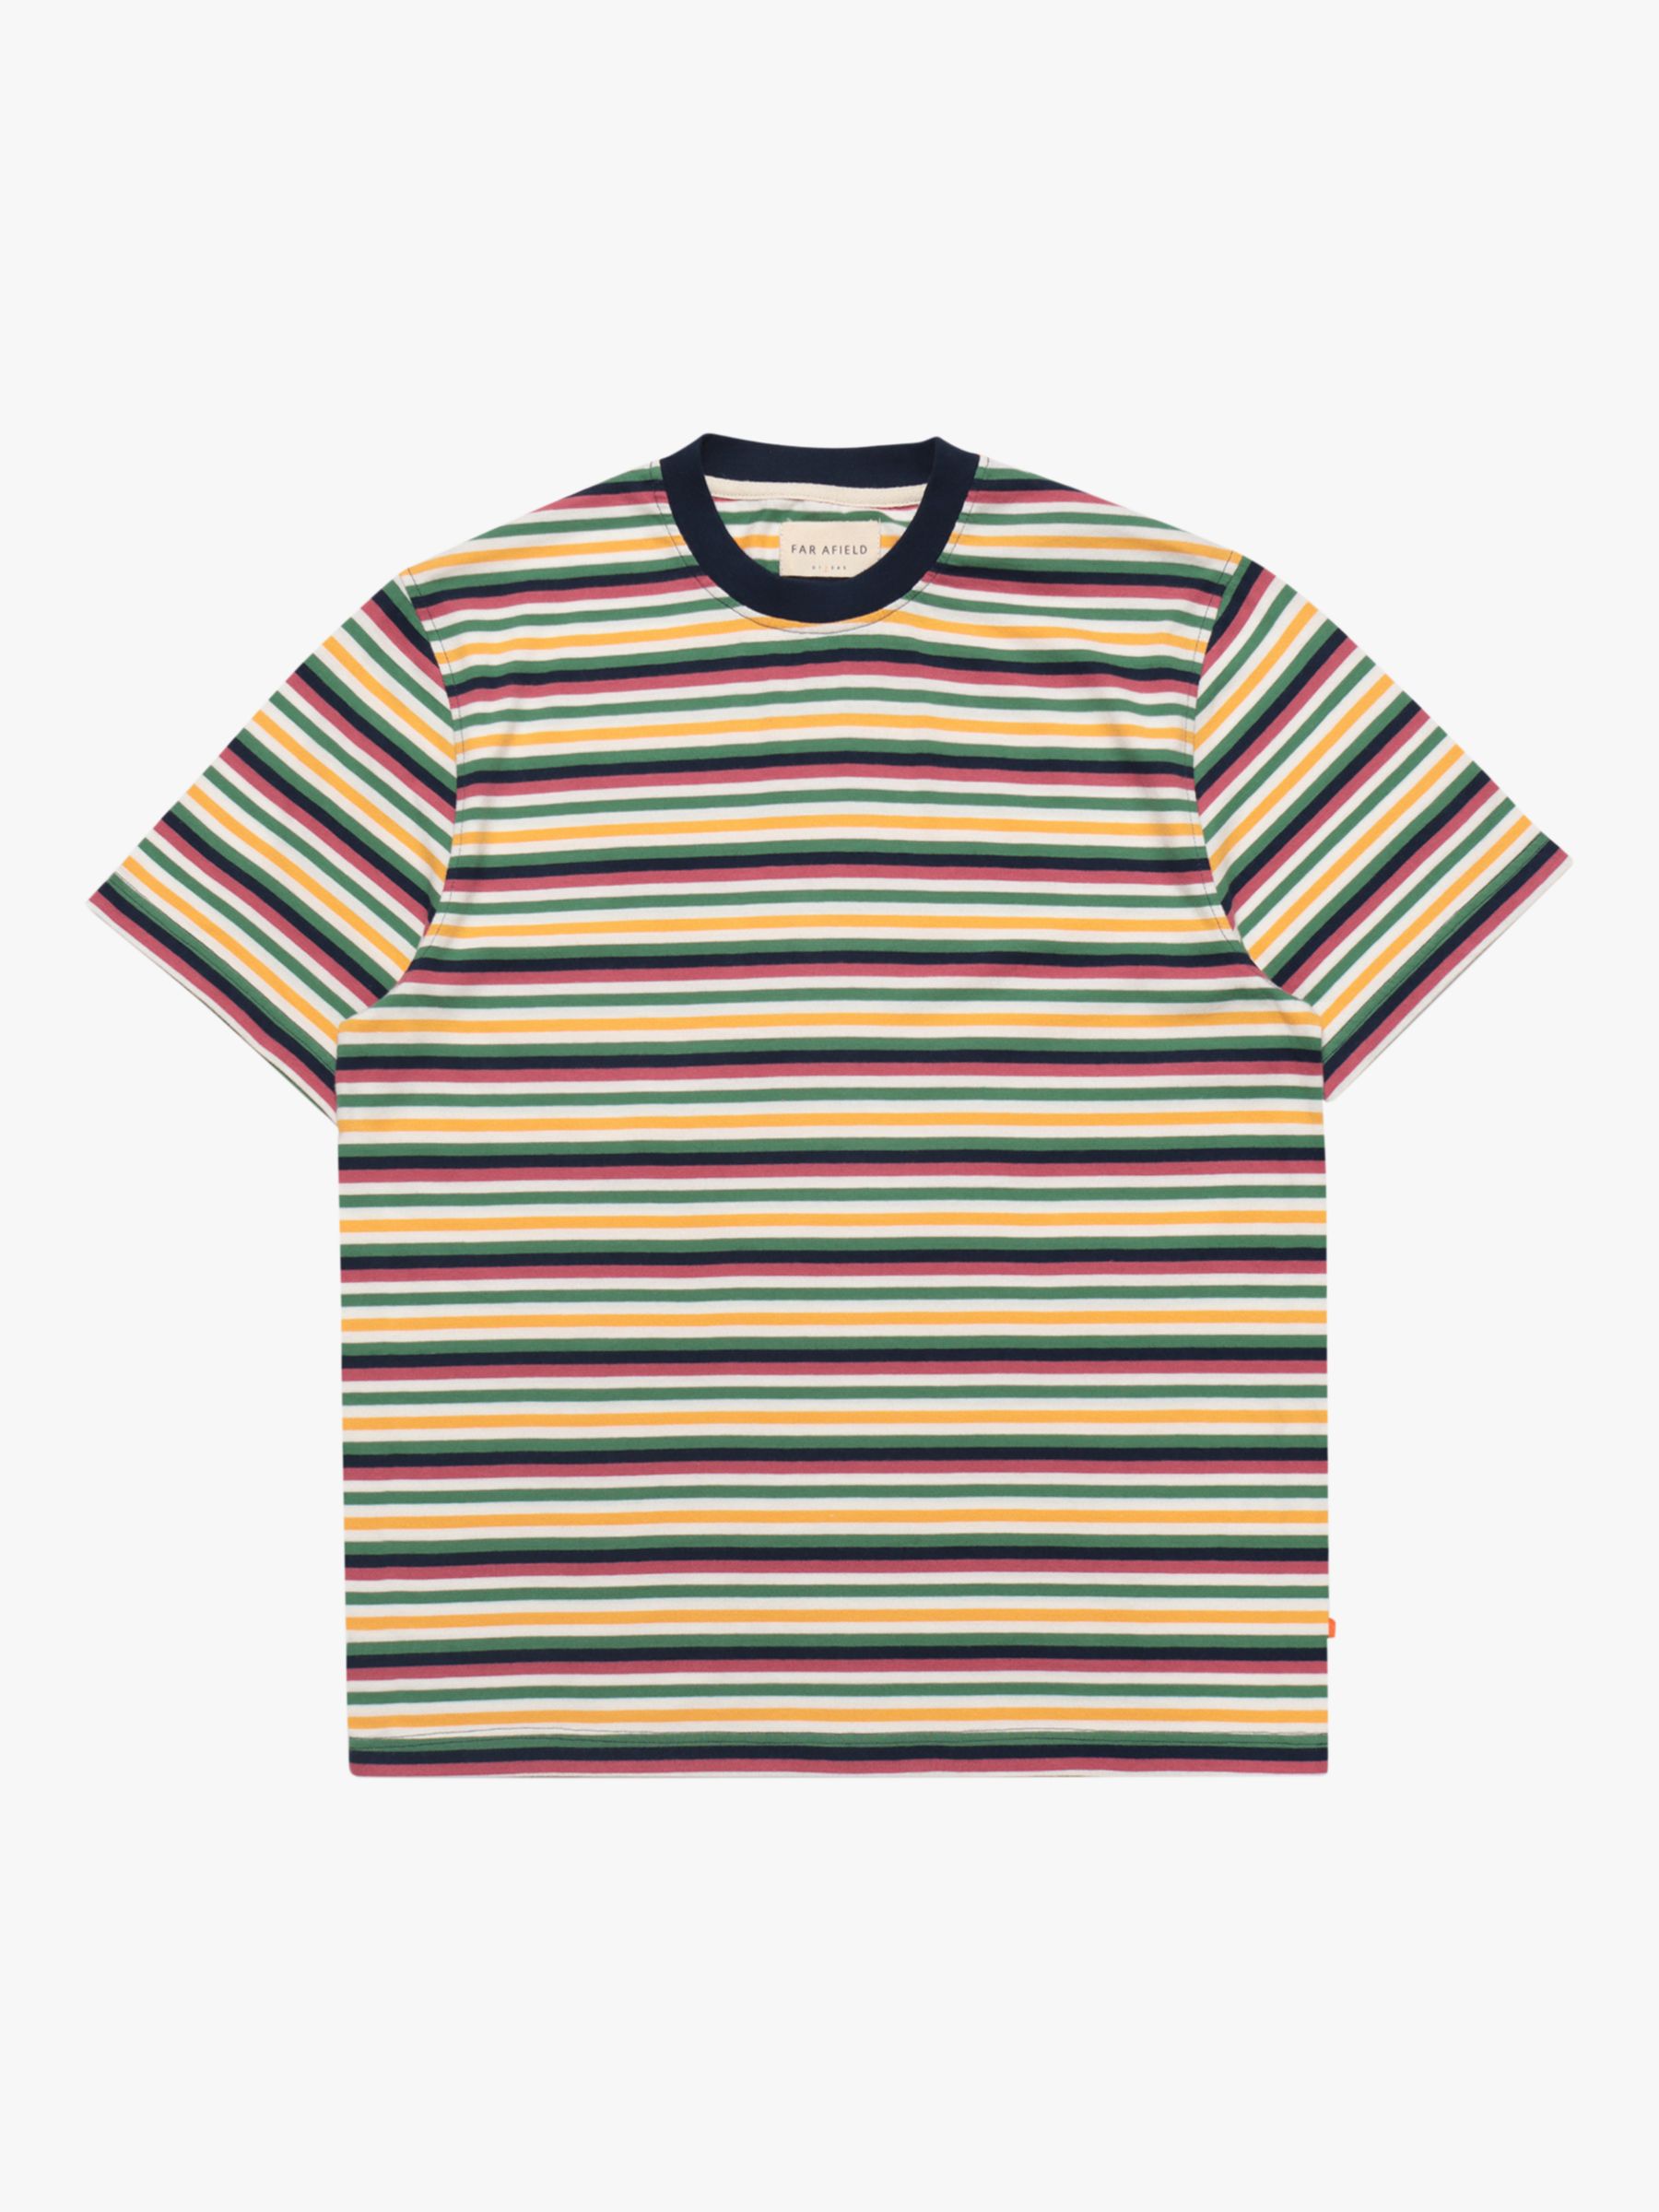 Far Afield Striped Organic Cotton Crew Neck T-Shirt, Multi, XL